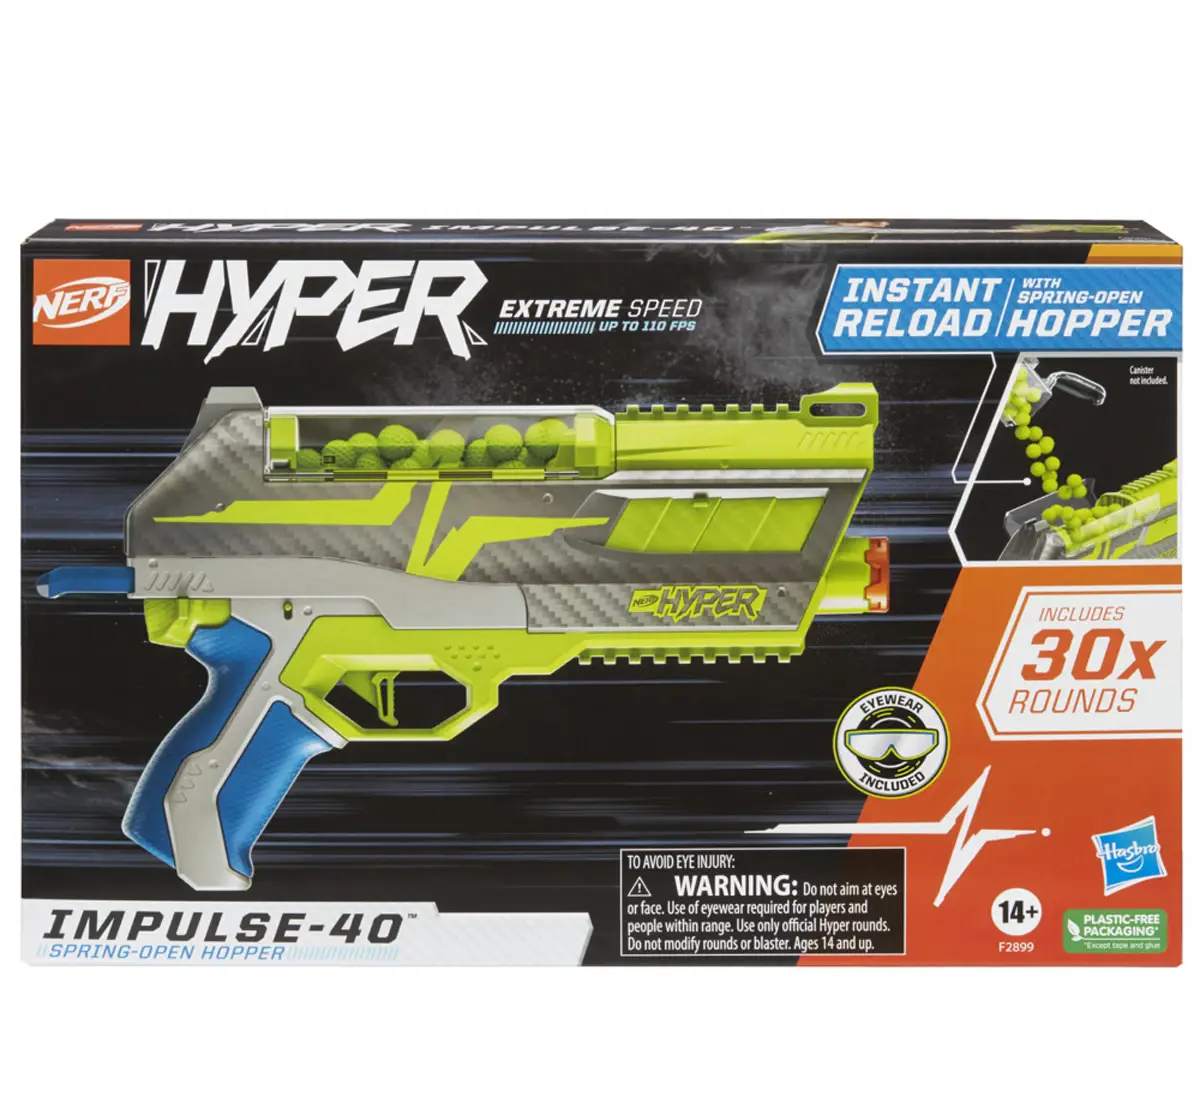 Nerf Hyper Impulse-40 Blaster, 30 Nerf Hyper Rounds, Spring-Open Instant Reload Hopper, Up To 110 FPS Velocity, Eyewear Included, 14Y+